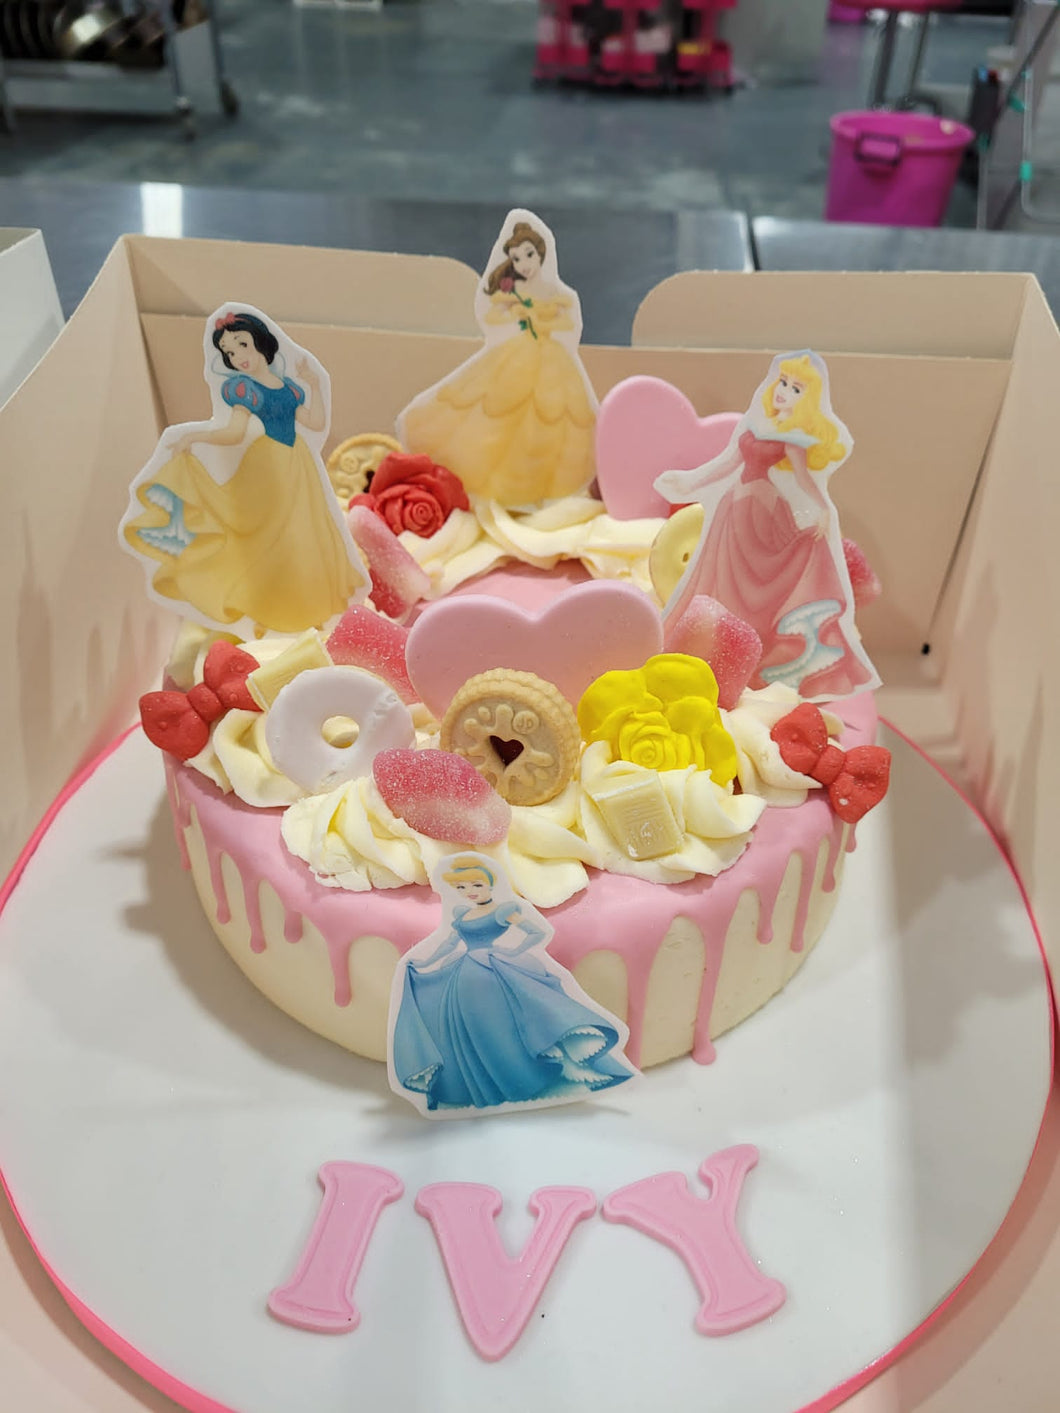 Disney Princess celebration cake